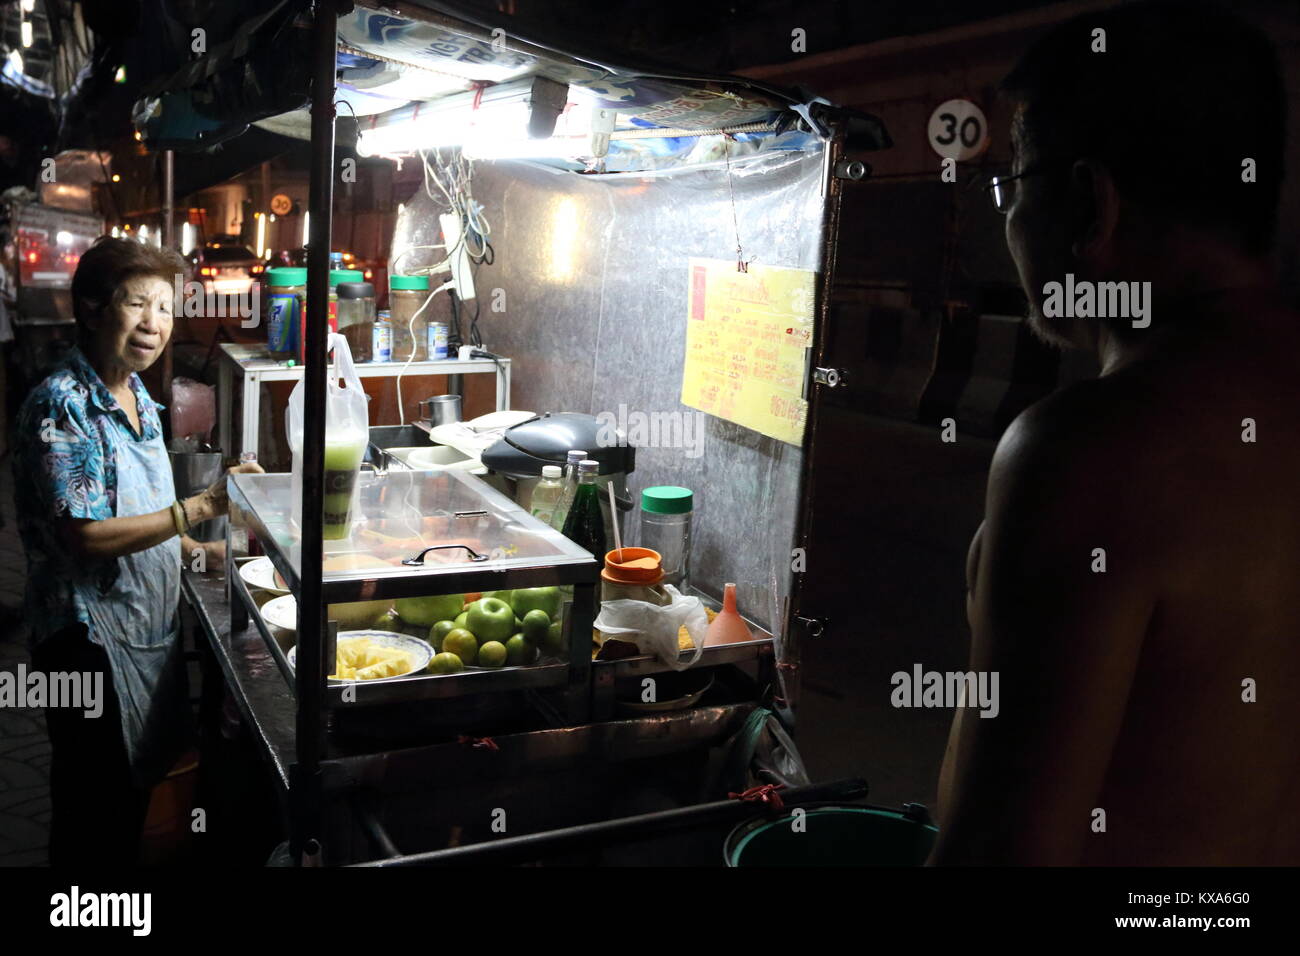 Street food vendor in Chinatown, Bangkok, Thailand Stock Photo